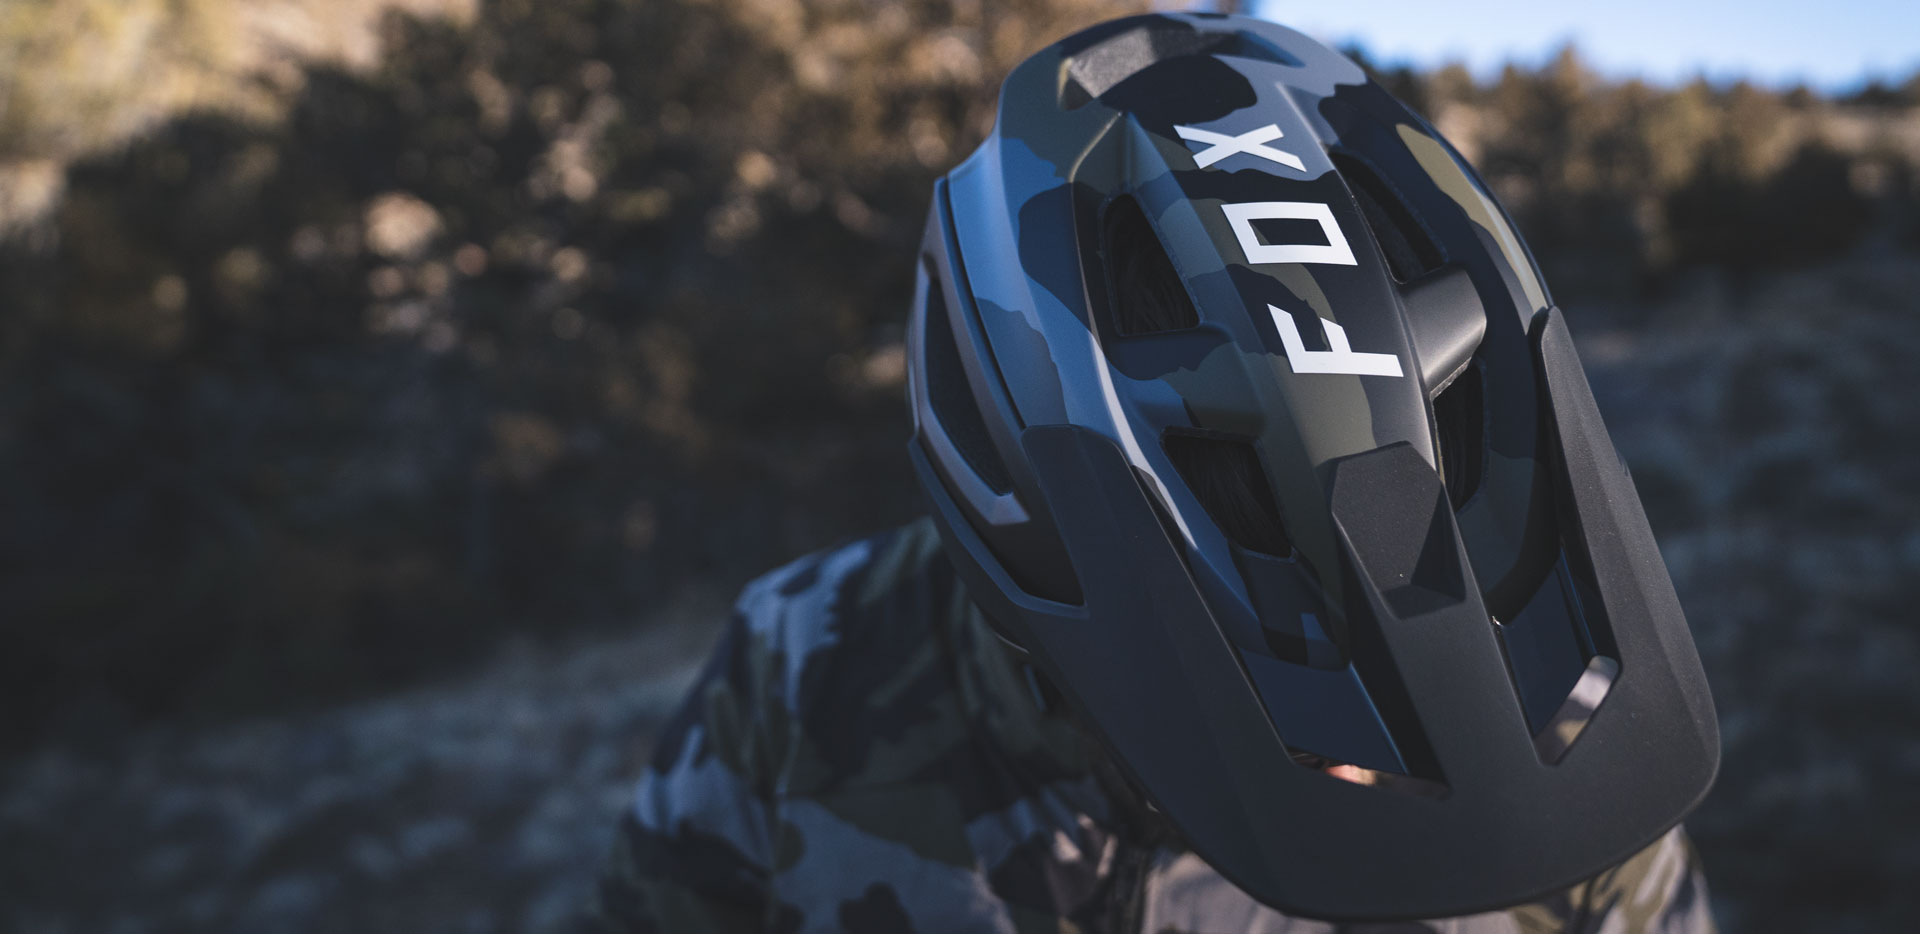 Fox Speedframe Pro Helmet Review